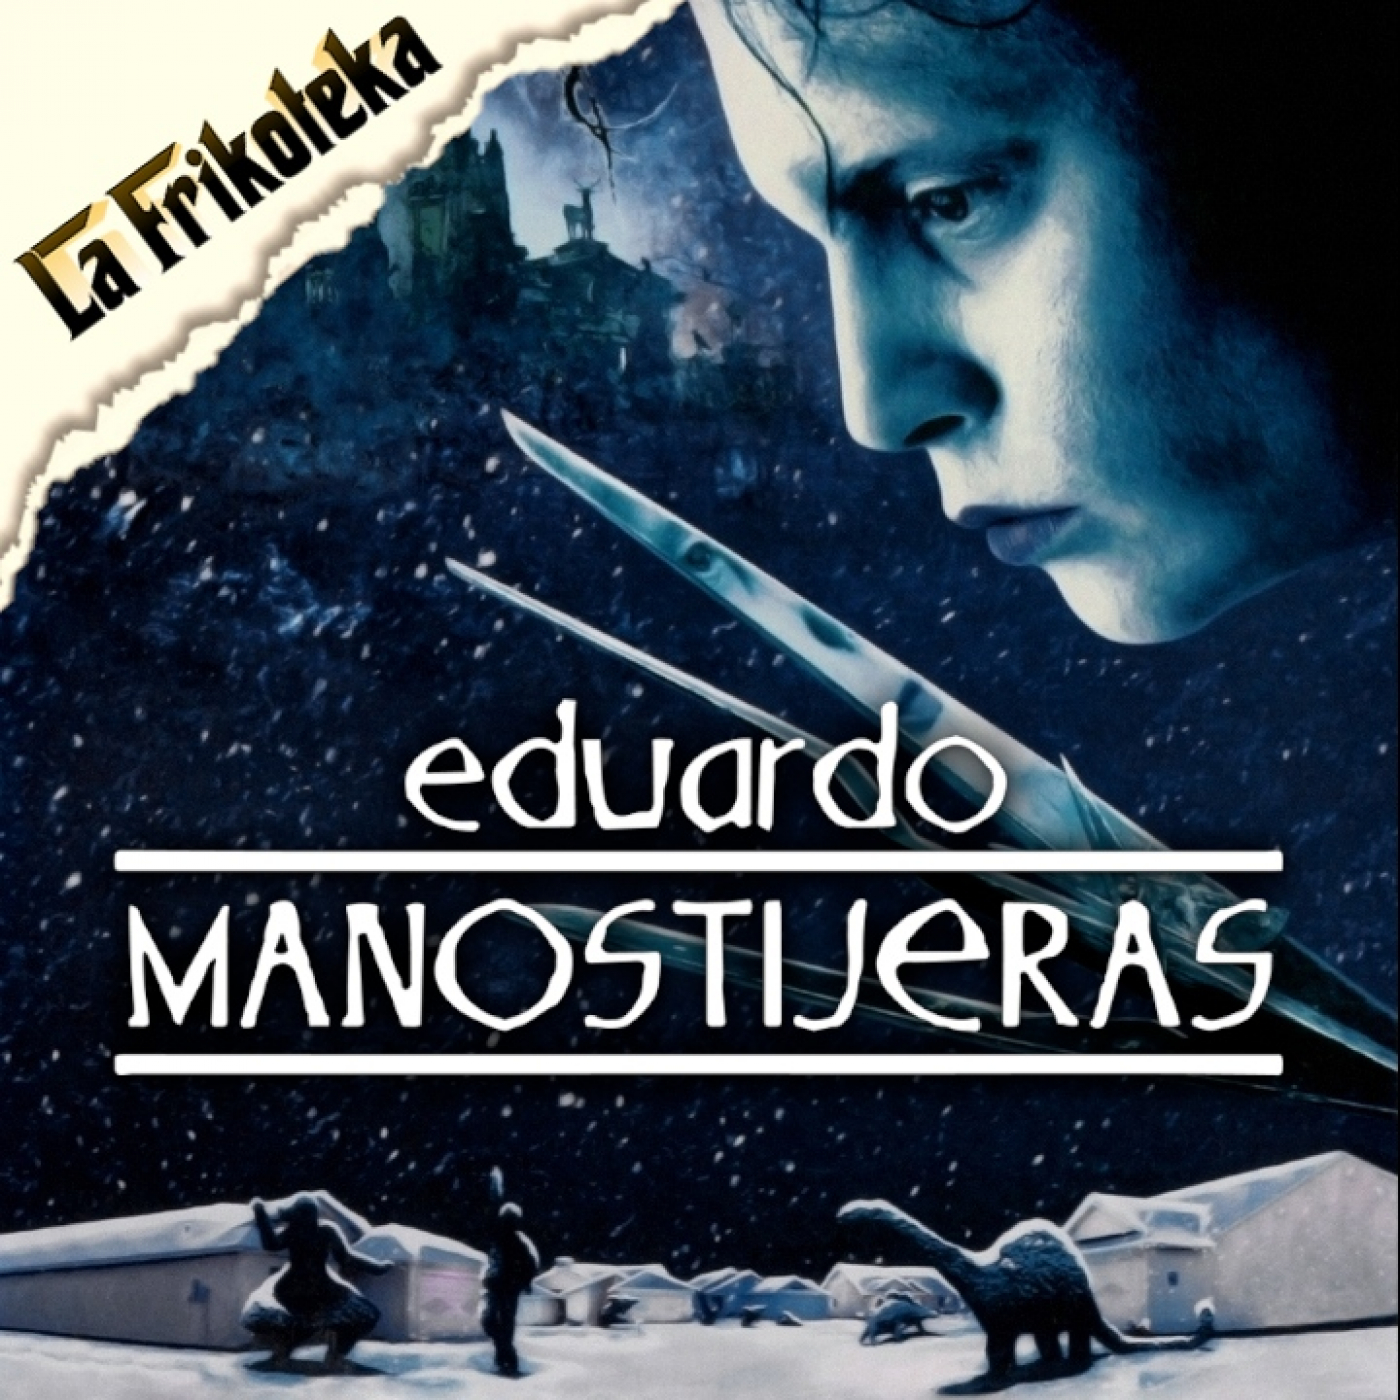 149 - Eduardo Manostijeras (1990) - Episodio exclusivo para mecenas